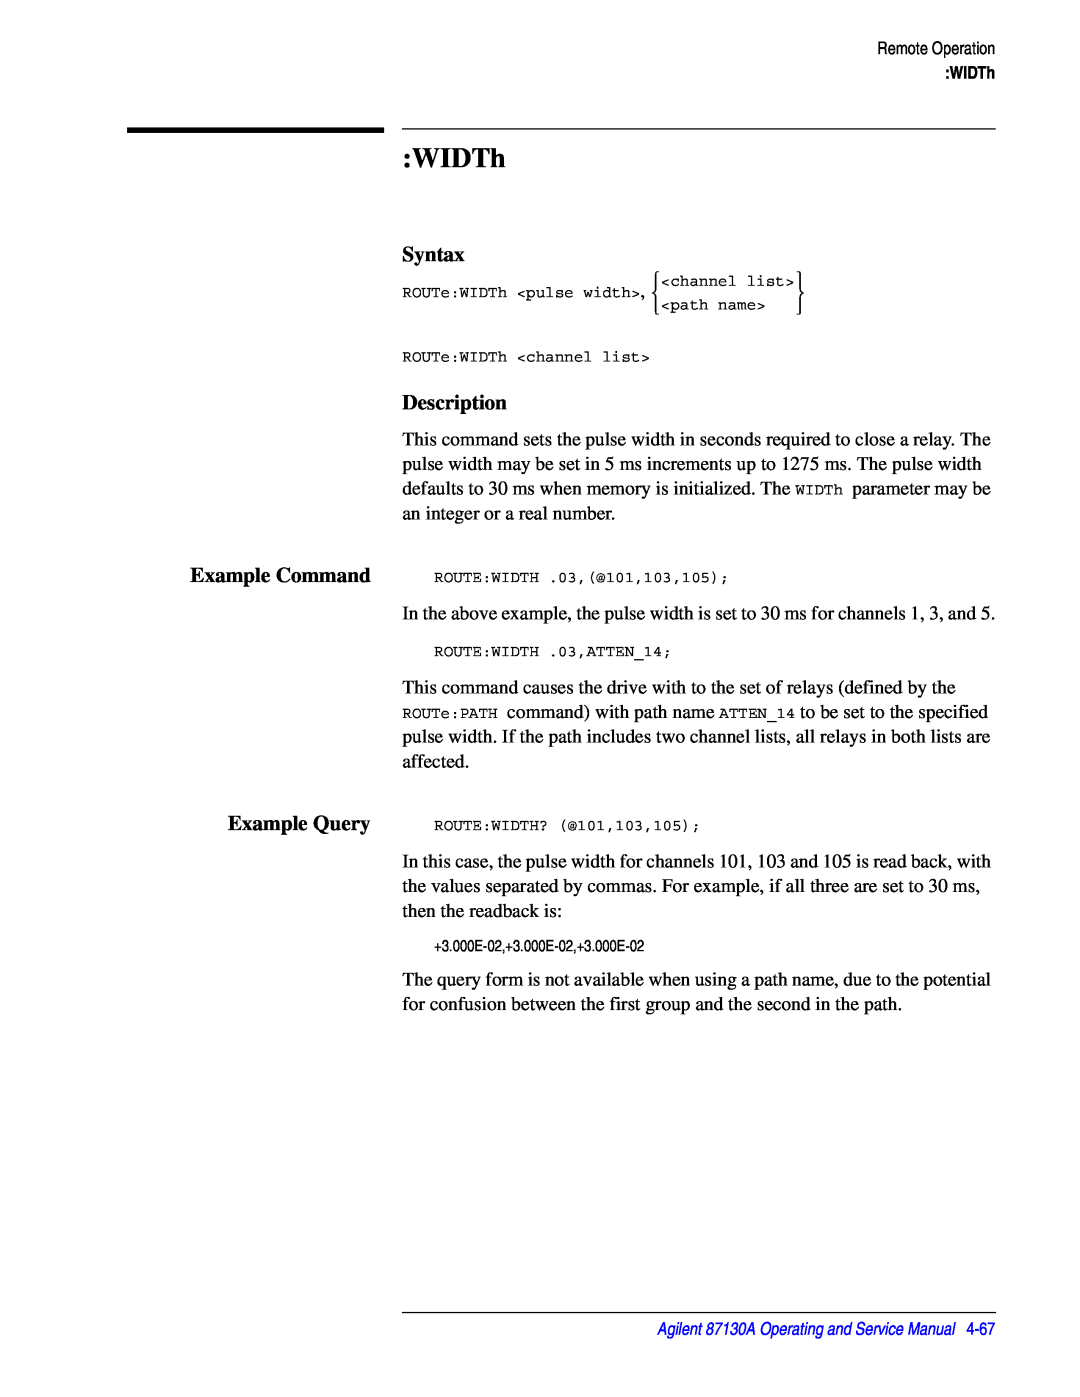 Agilent Technologies 87130A manual WIDTh, Syntax, Description 